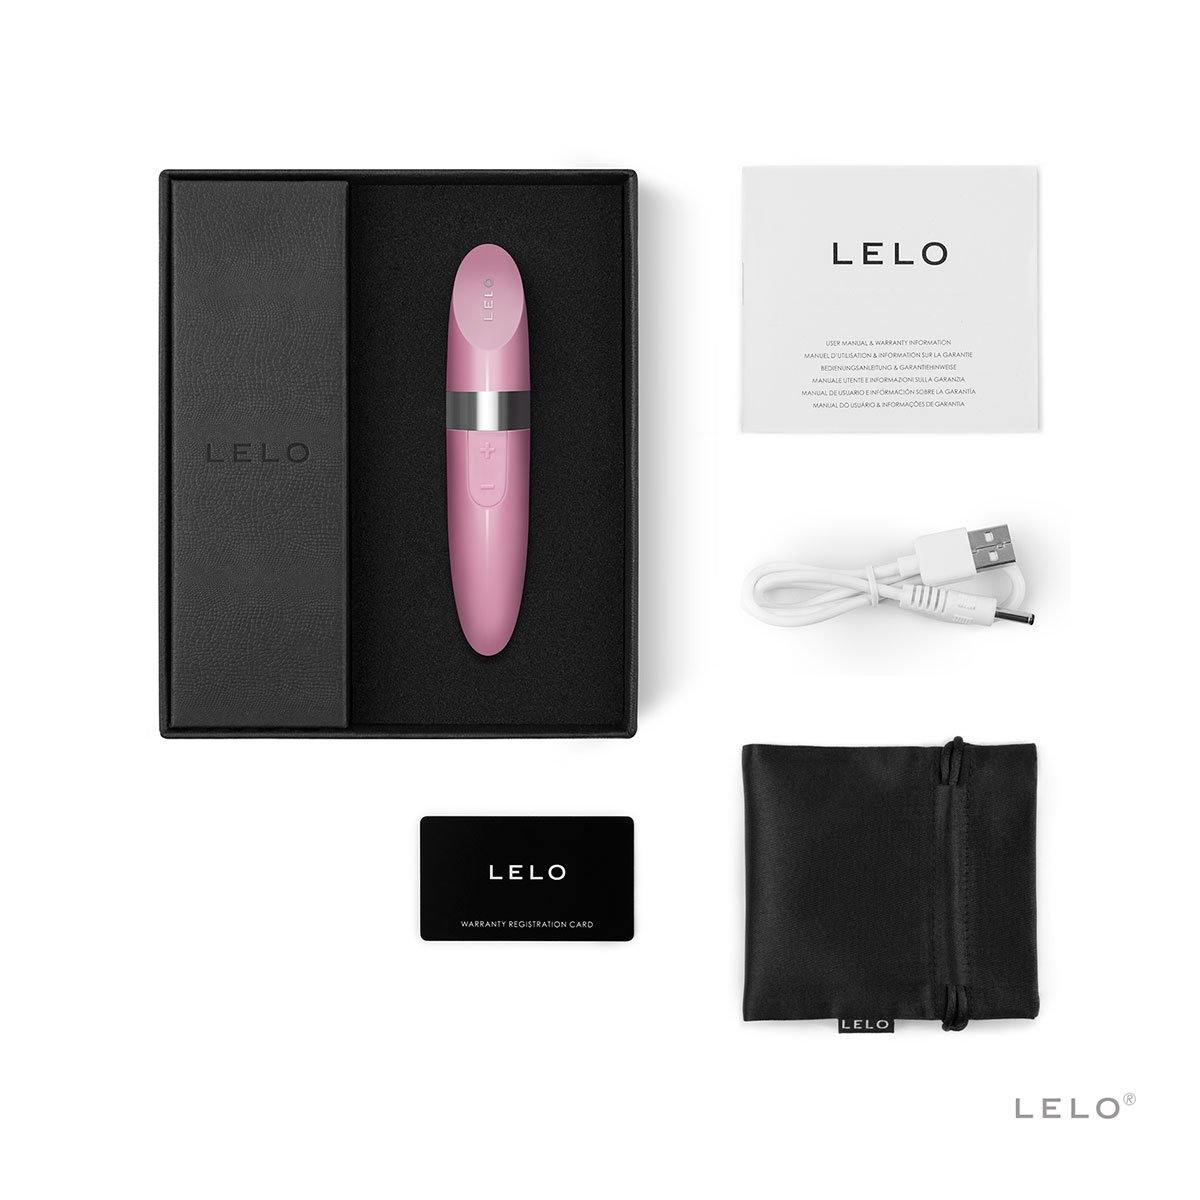 Lelo Mia 2 - Buy At Luxury Toy X - Free 3-Day Shipping